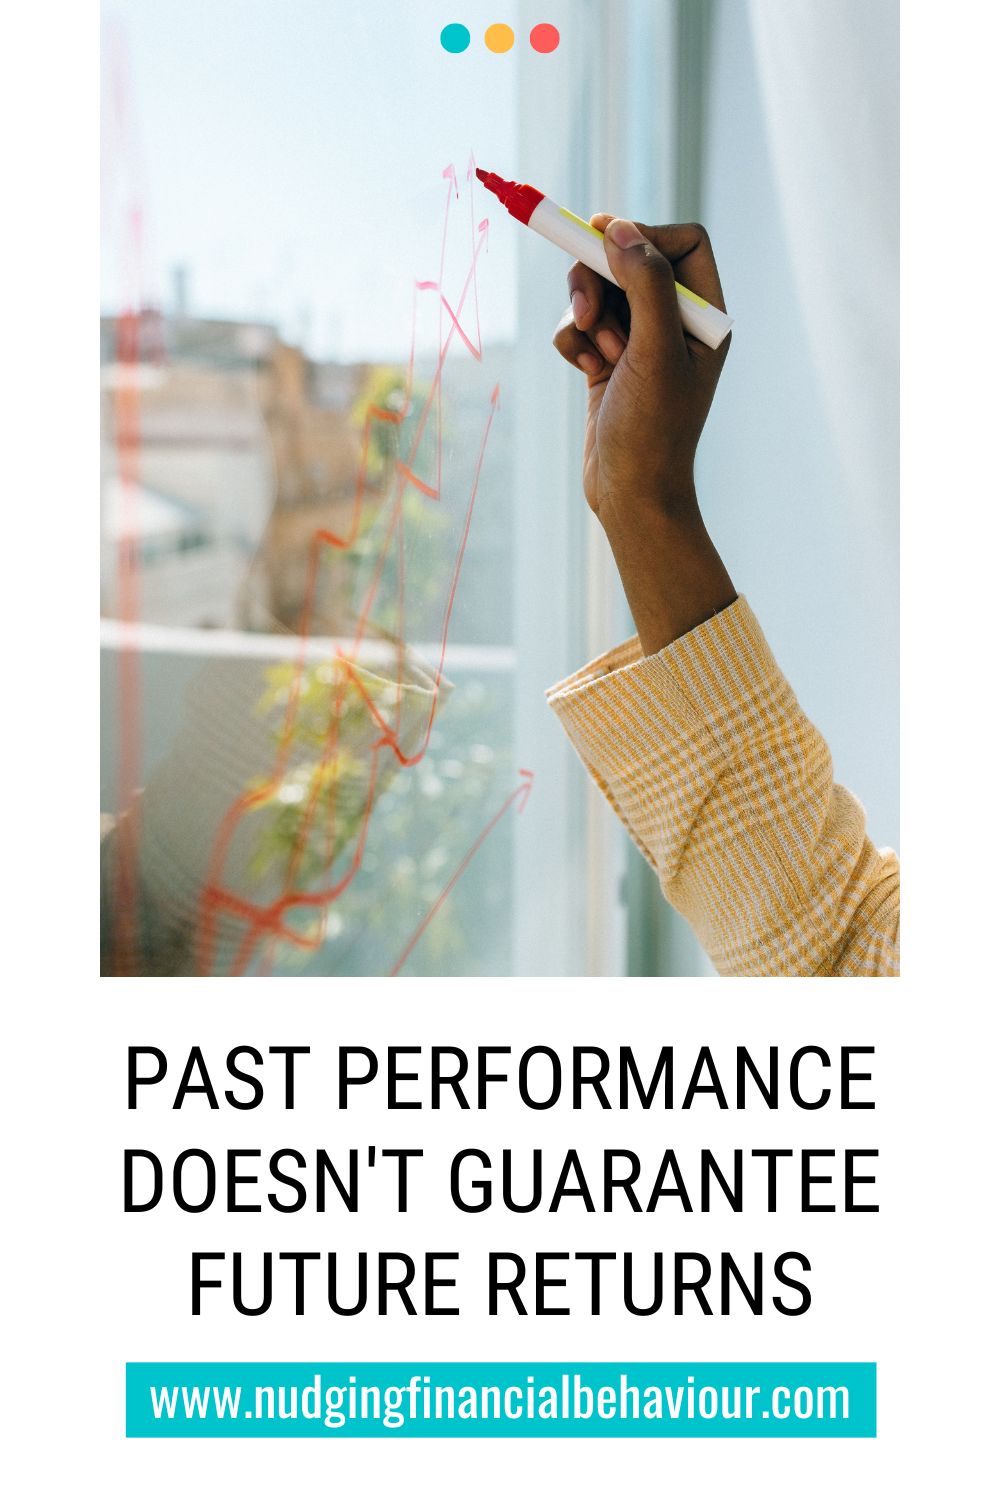 Past performance doesn't guarantee future returns